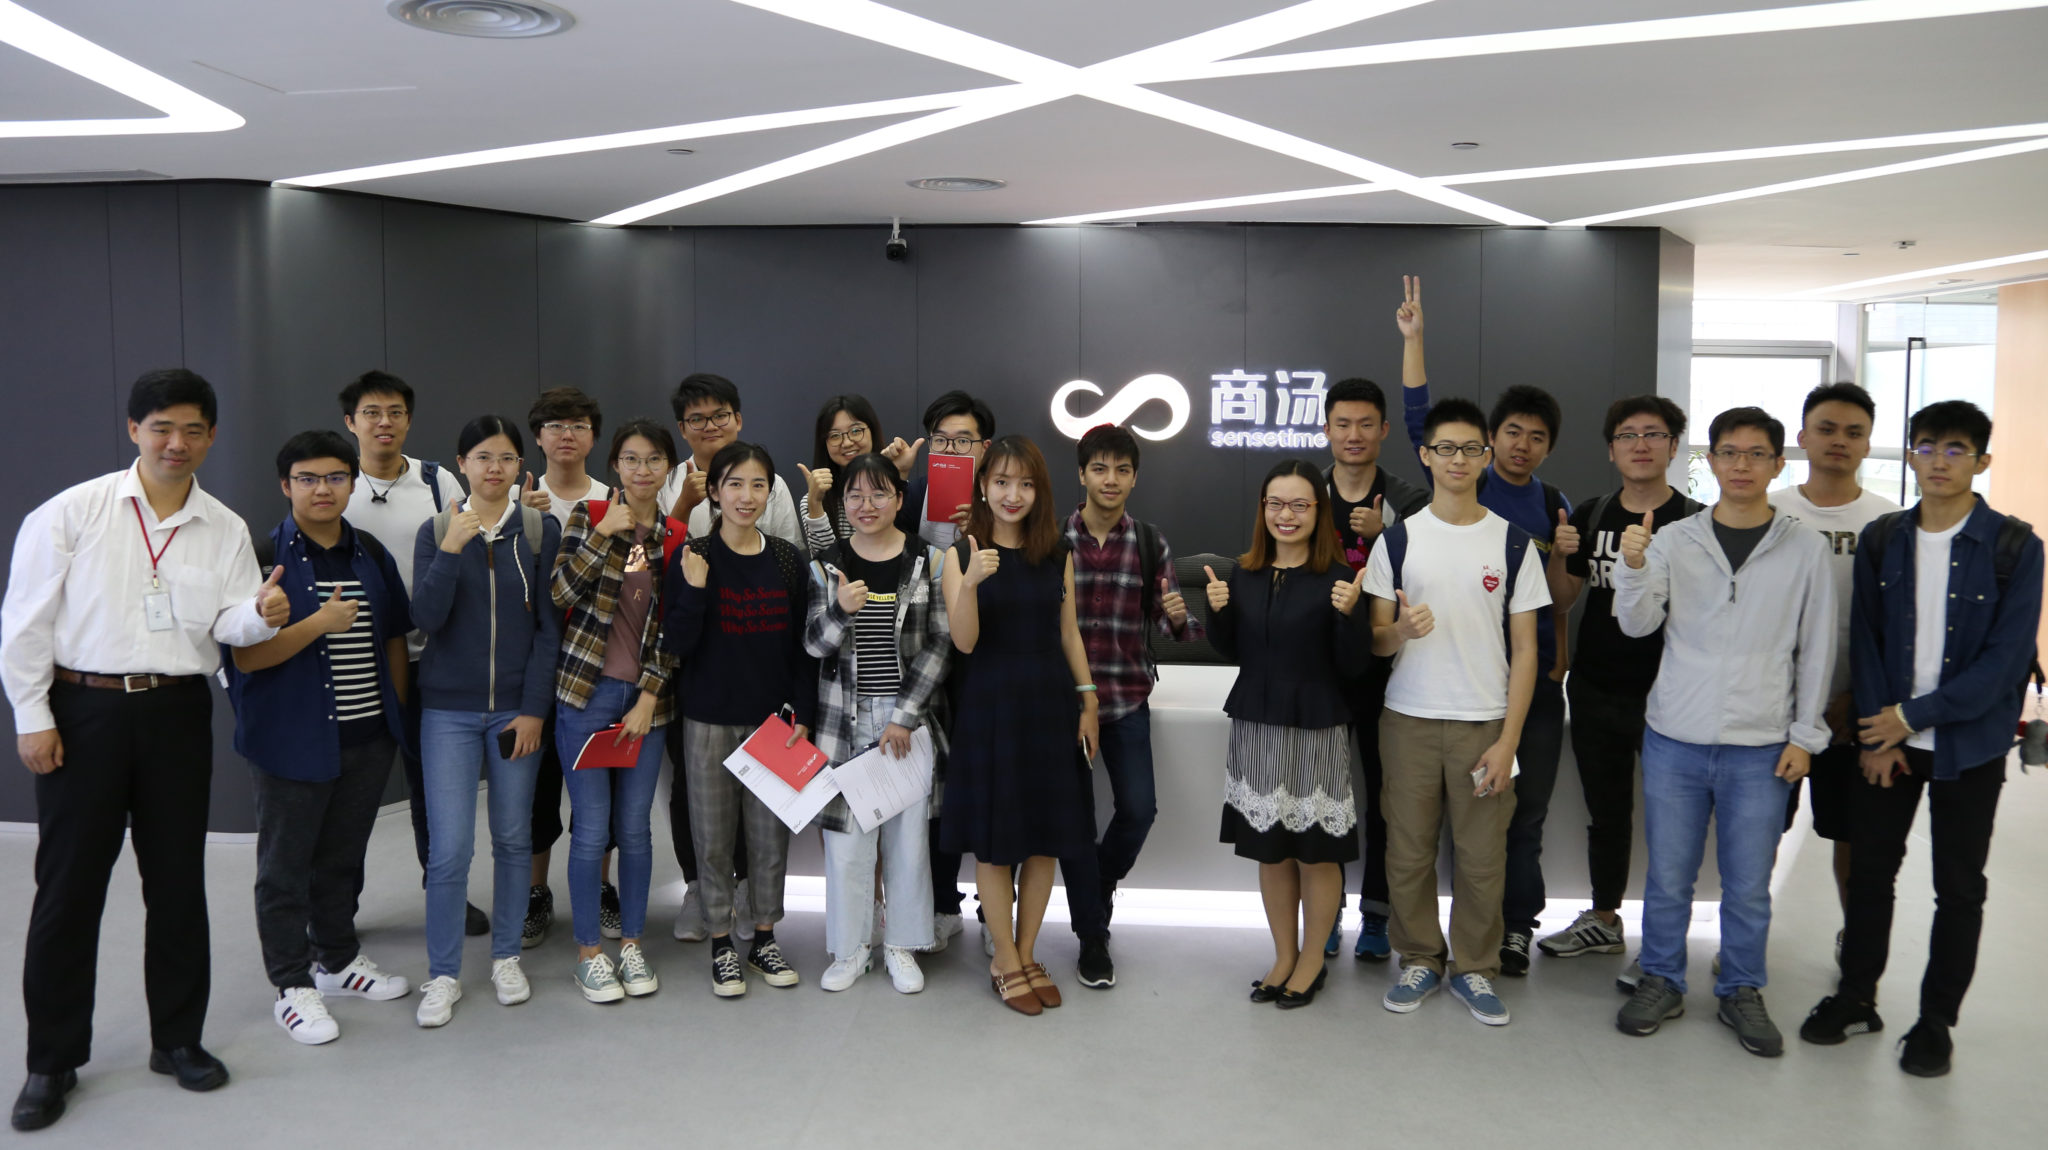 MScIE students took a visit to SenseTime